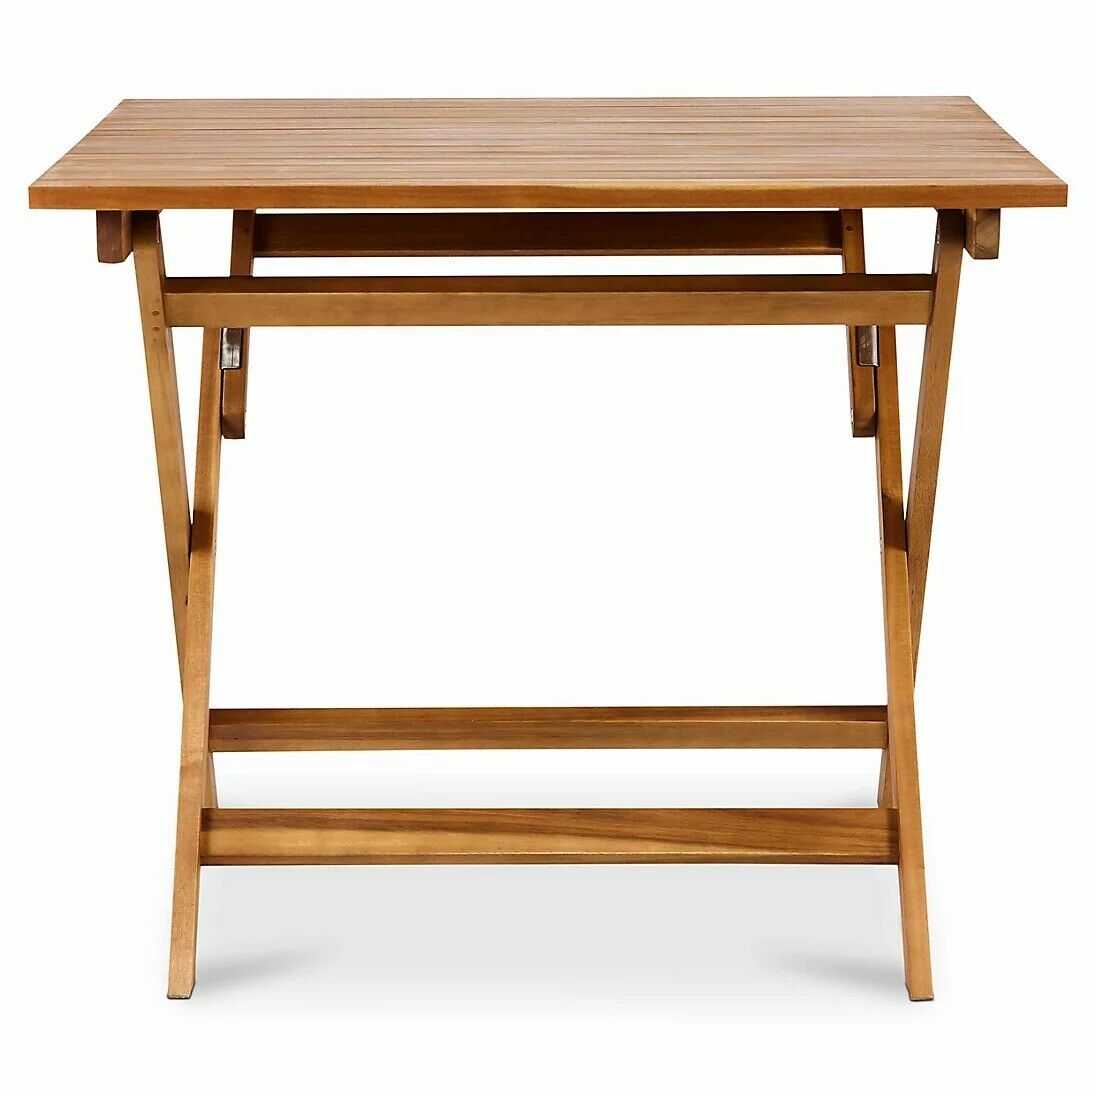 GoodHome Virginia Acacia Wooden Foldable 2 seater Table - Wooden Garden Table 4629D